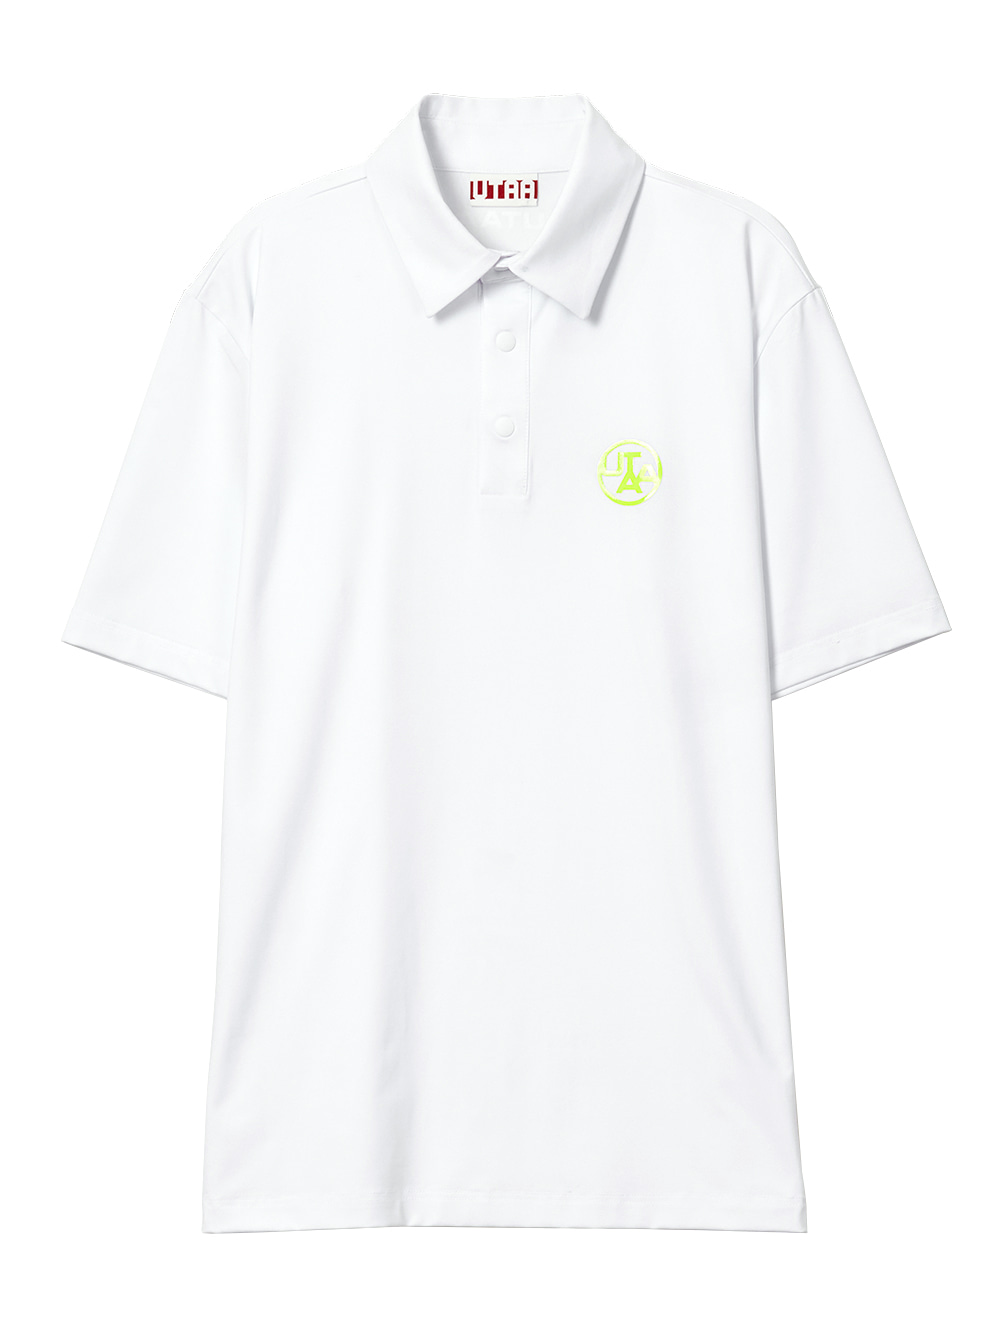 UTAA Neon Emblem Polo T-shirts : Mens  (UA2TSM402WH)